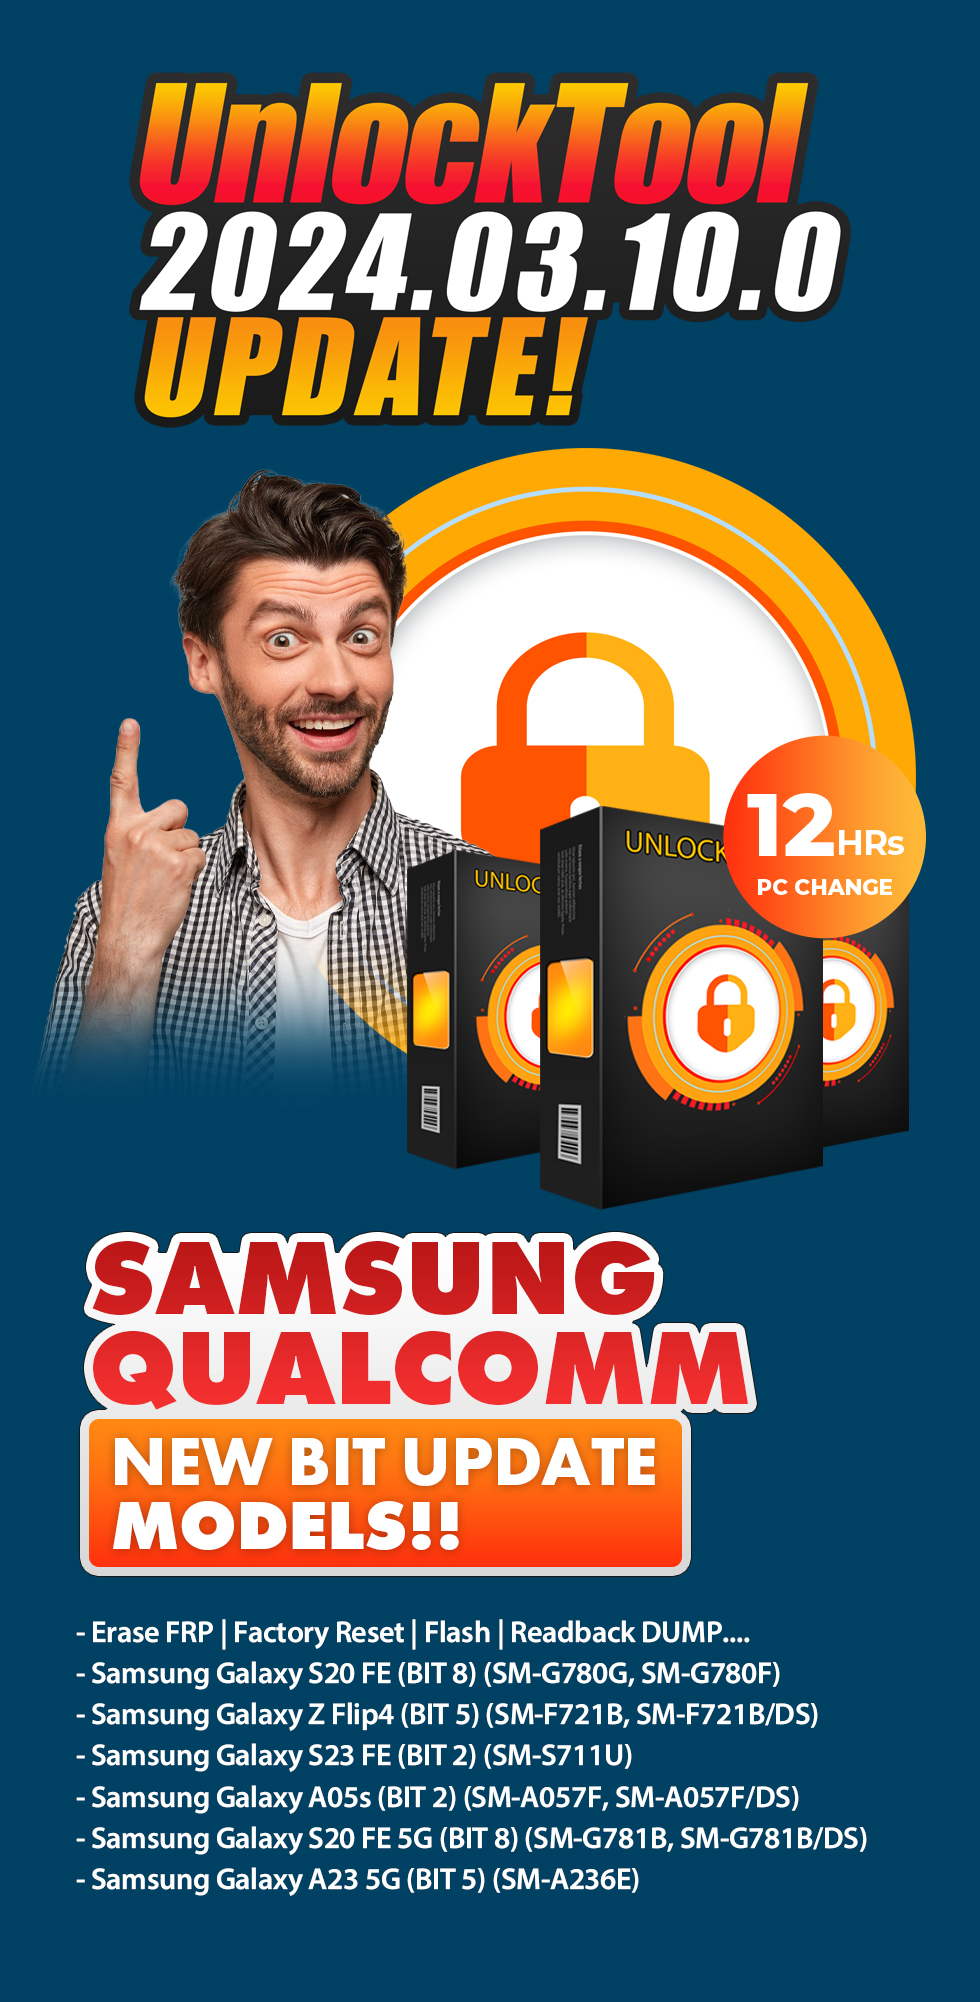 UnlockTool_2024.03.10.0 Released Update ! World first - Samsung Qualcomm New Bit